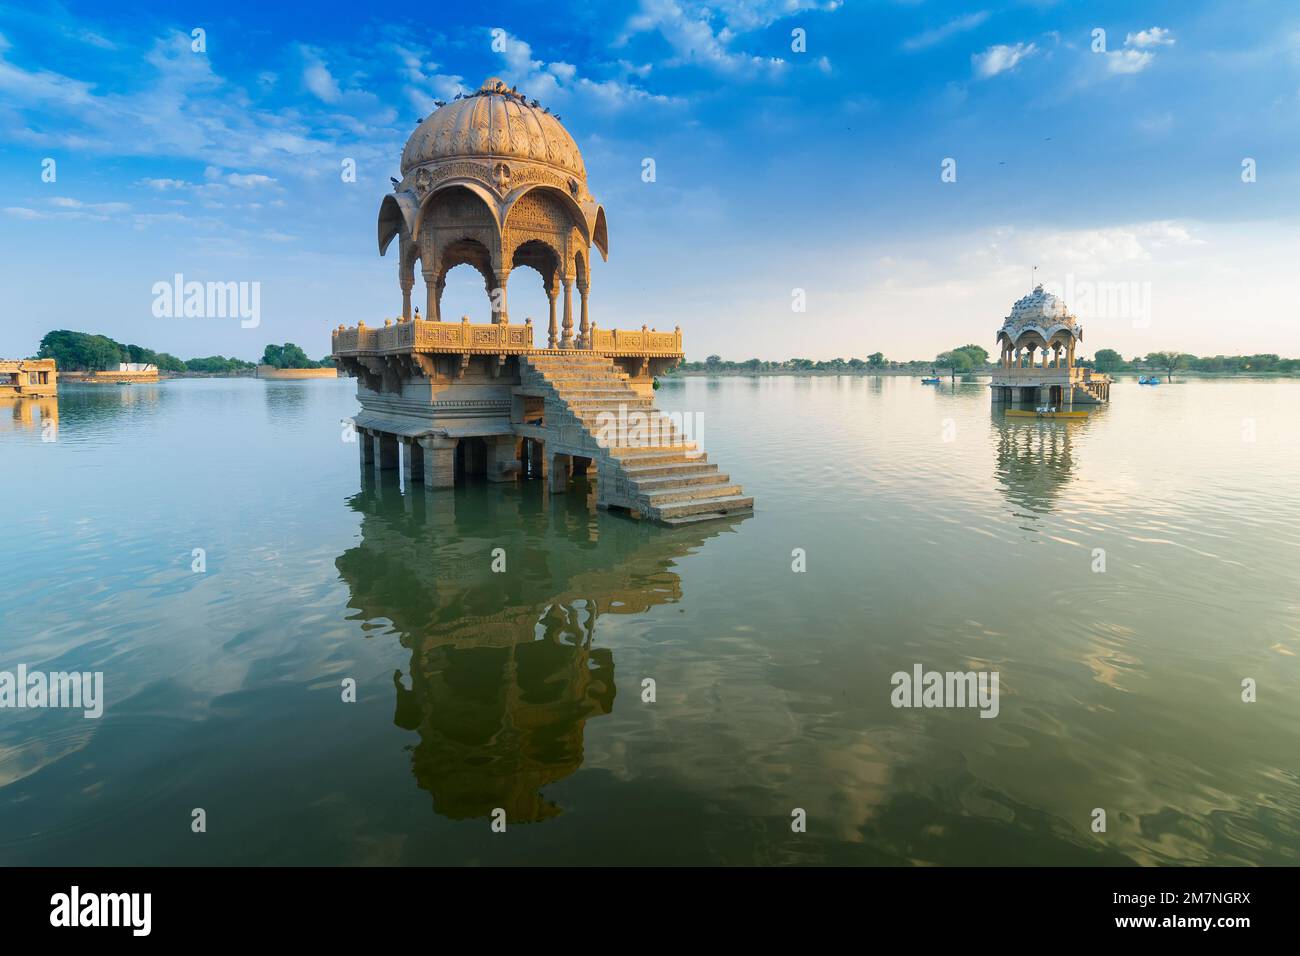 Chhatris, dome-shaped pavilions on Gadisar or Gadaria lake, Jaisalmer, Rajasthan, India. Built by King Rawal Jaisal,rebuilt by Gadsi Singh. Stock Photo